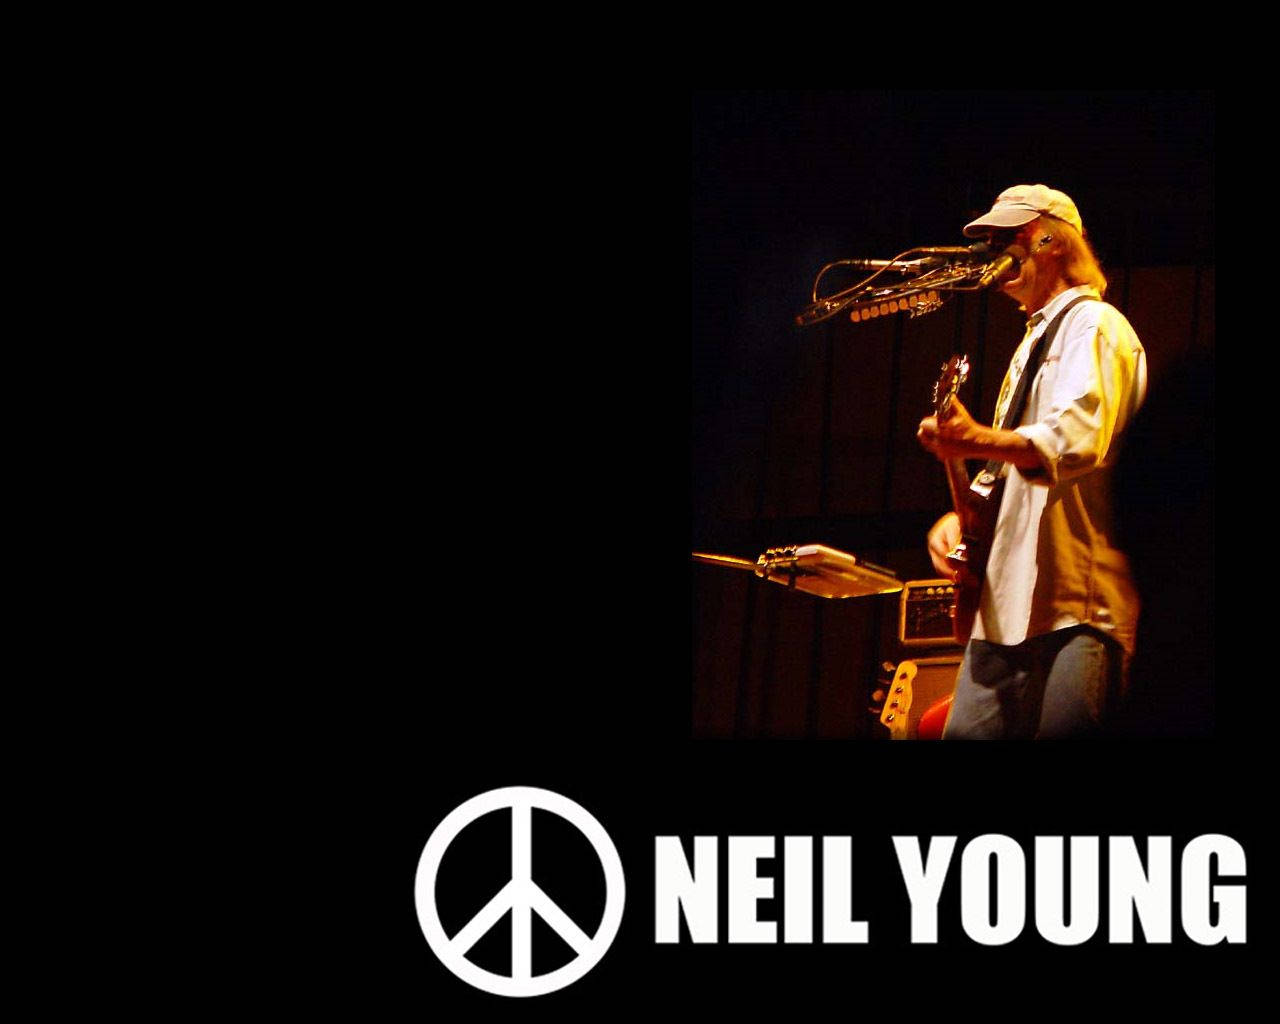 Music Legend Neil Young Digital Art Background